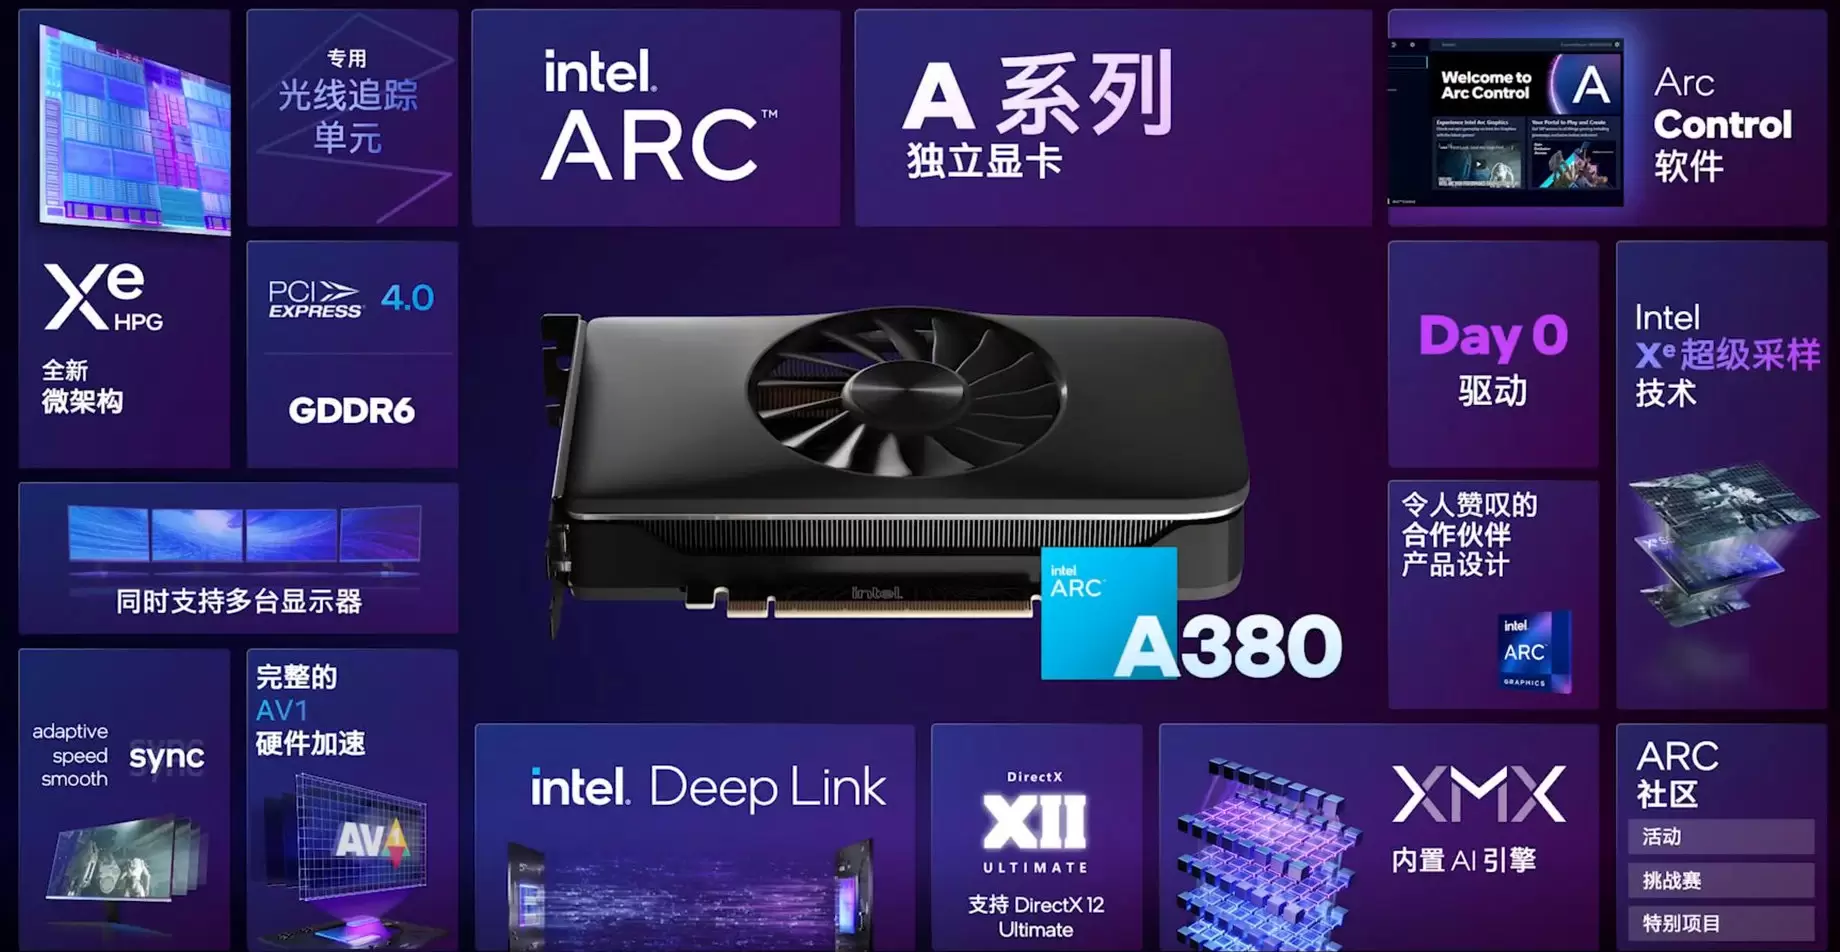 Arc xe. Intel Arc a380. Intel Arc a750. Intel Arc a370m. Intel Arc a380 характеристики.